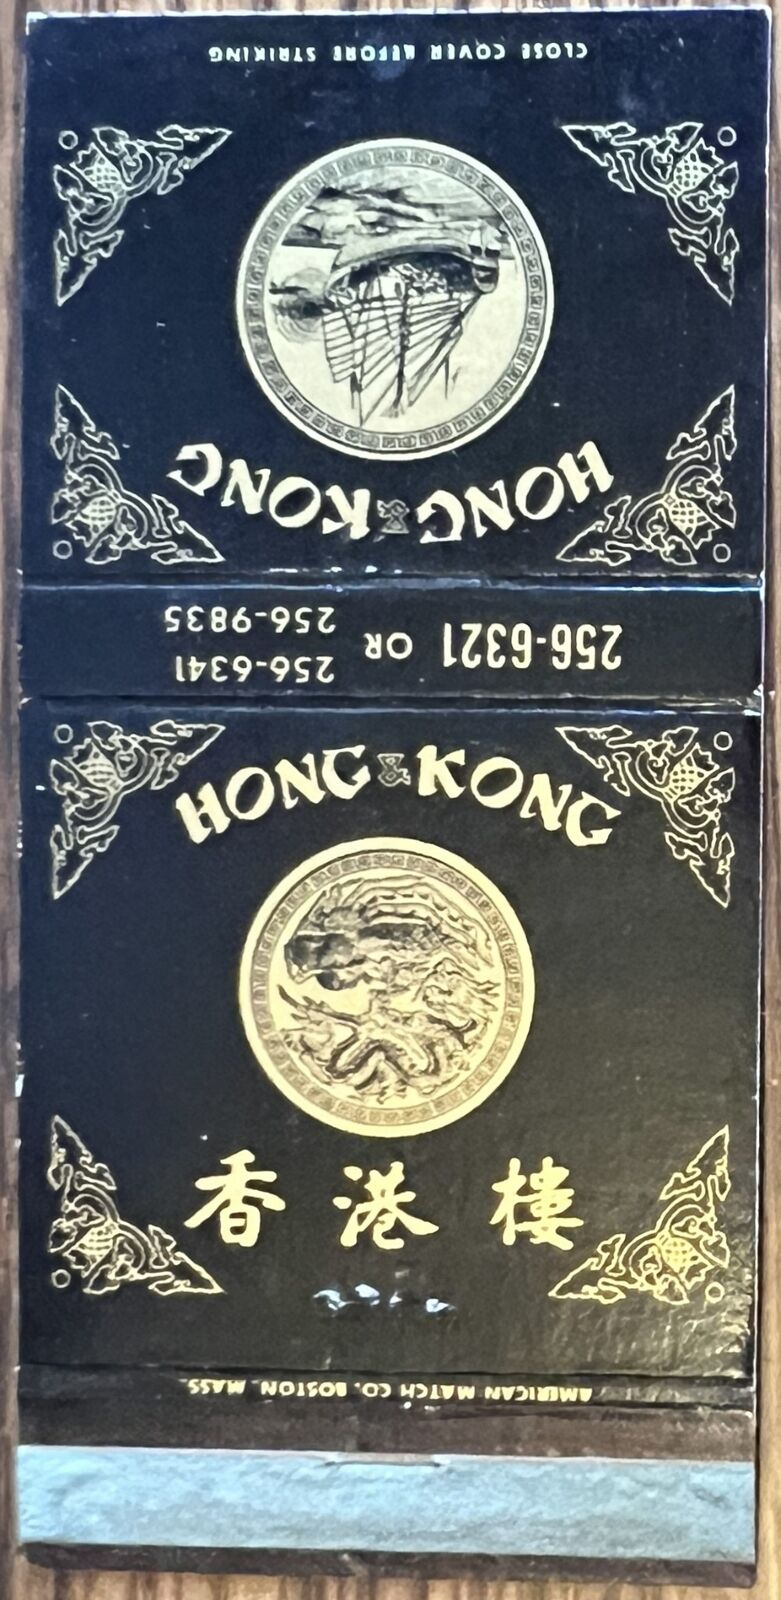 Hong & Kong Restaurant Chelmsford MA Massachusetts Vintage Matchbook Cover